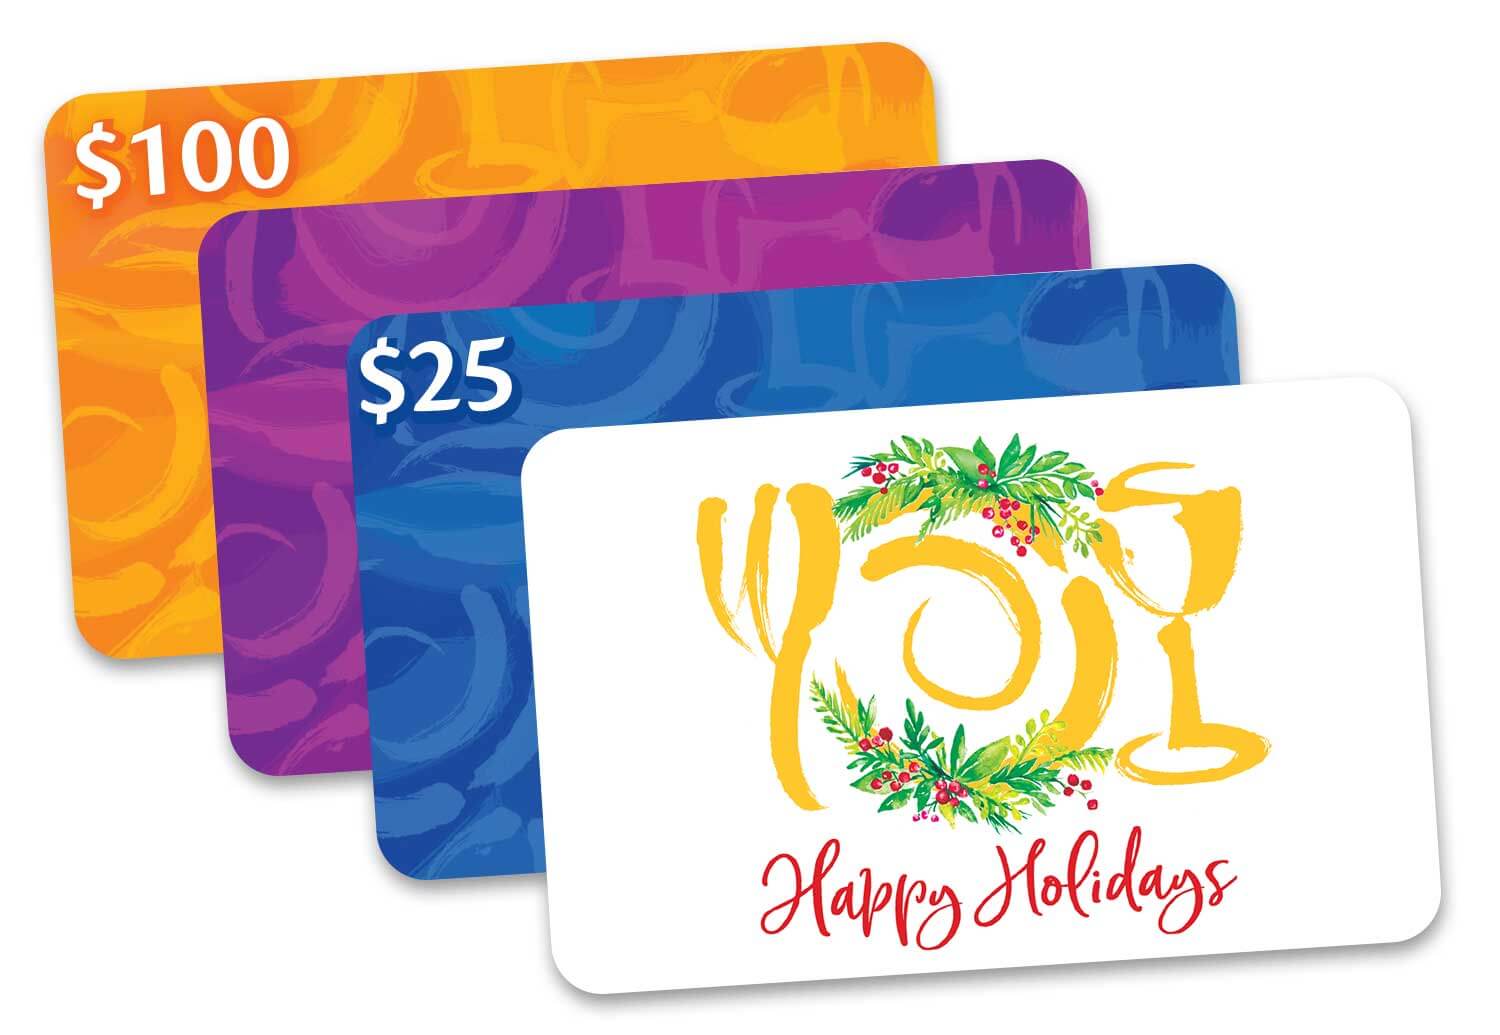 Gift Cards Online - Pickup, eGift Cards & Bulk Gift Cards